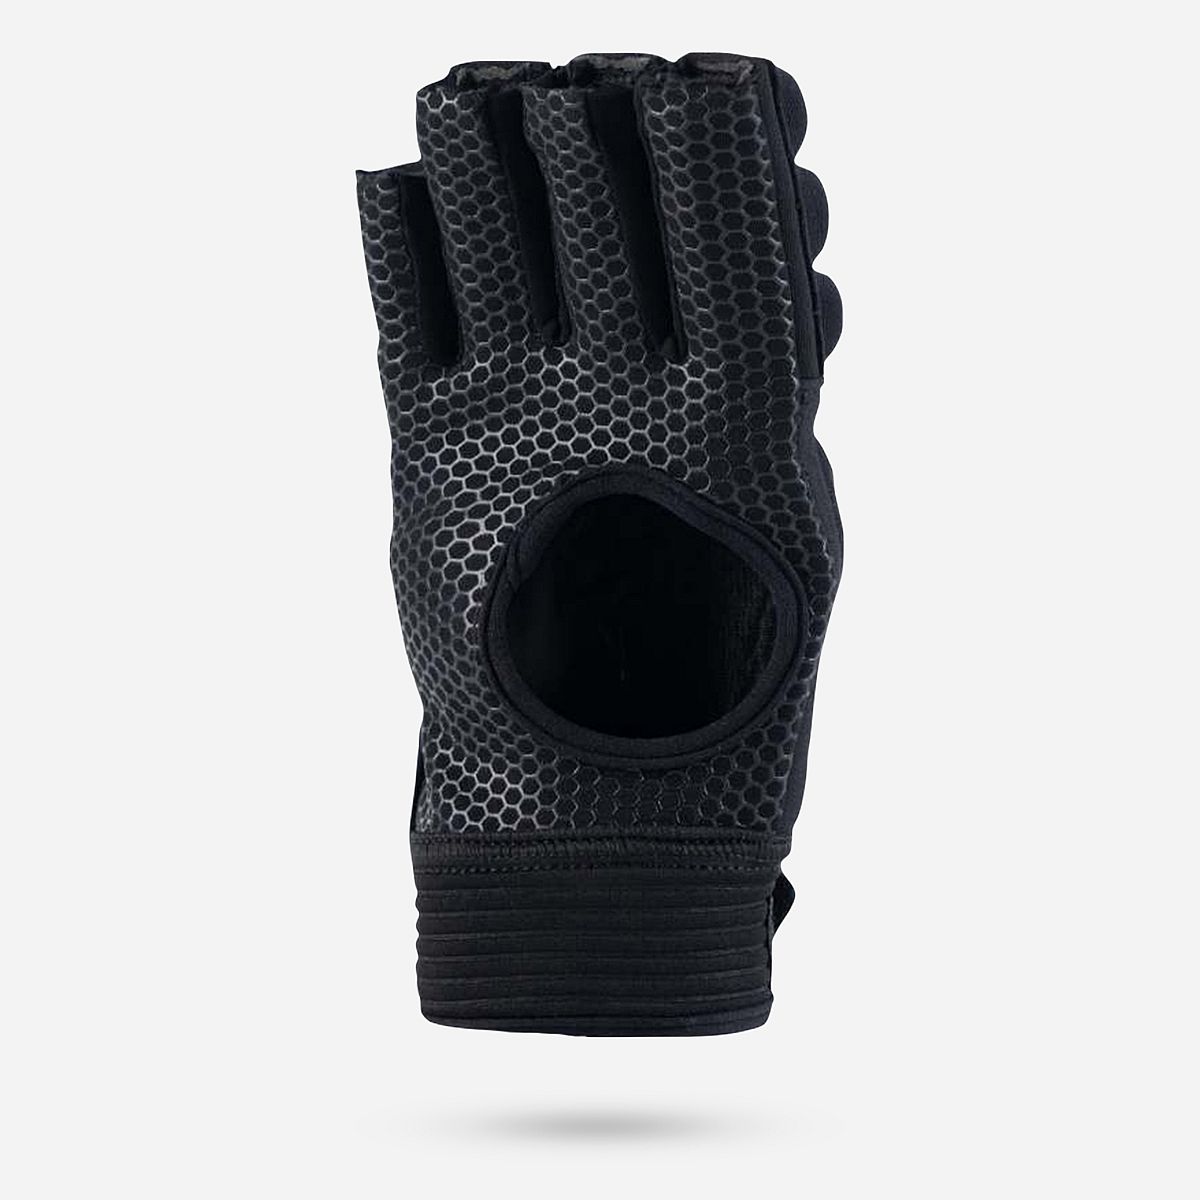 AN300652 Anatomic Pro Glove (linkshandig)